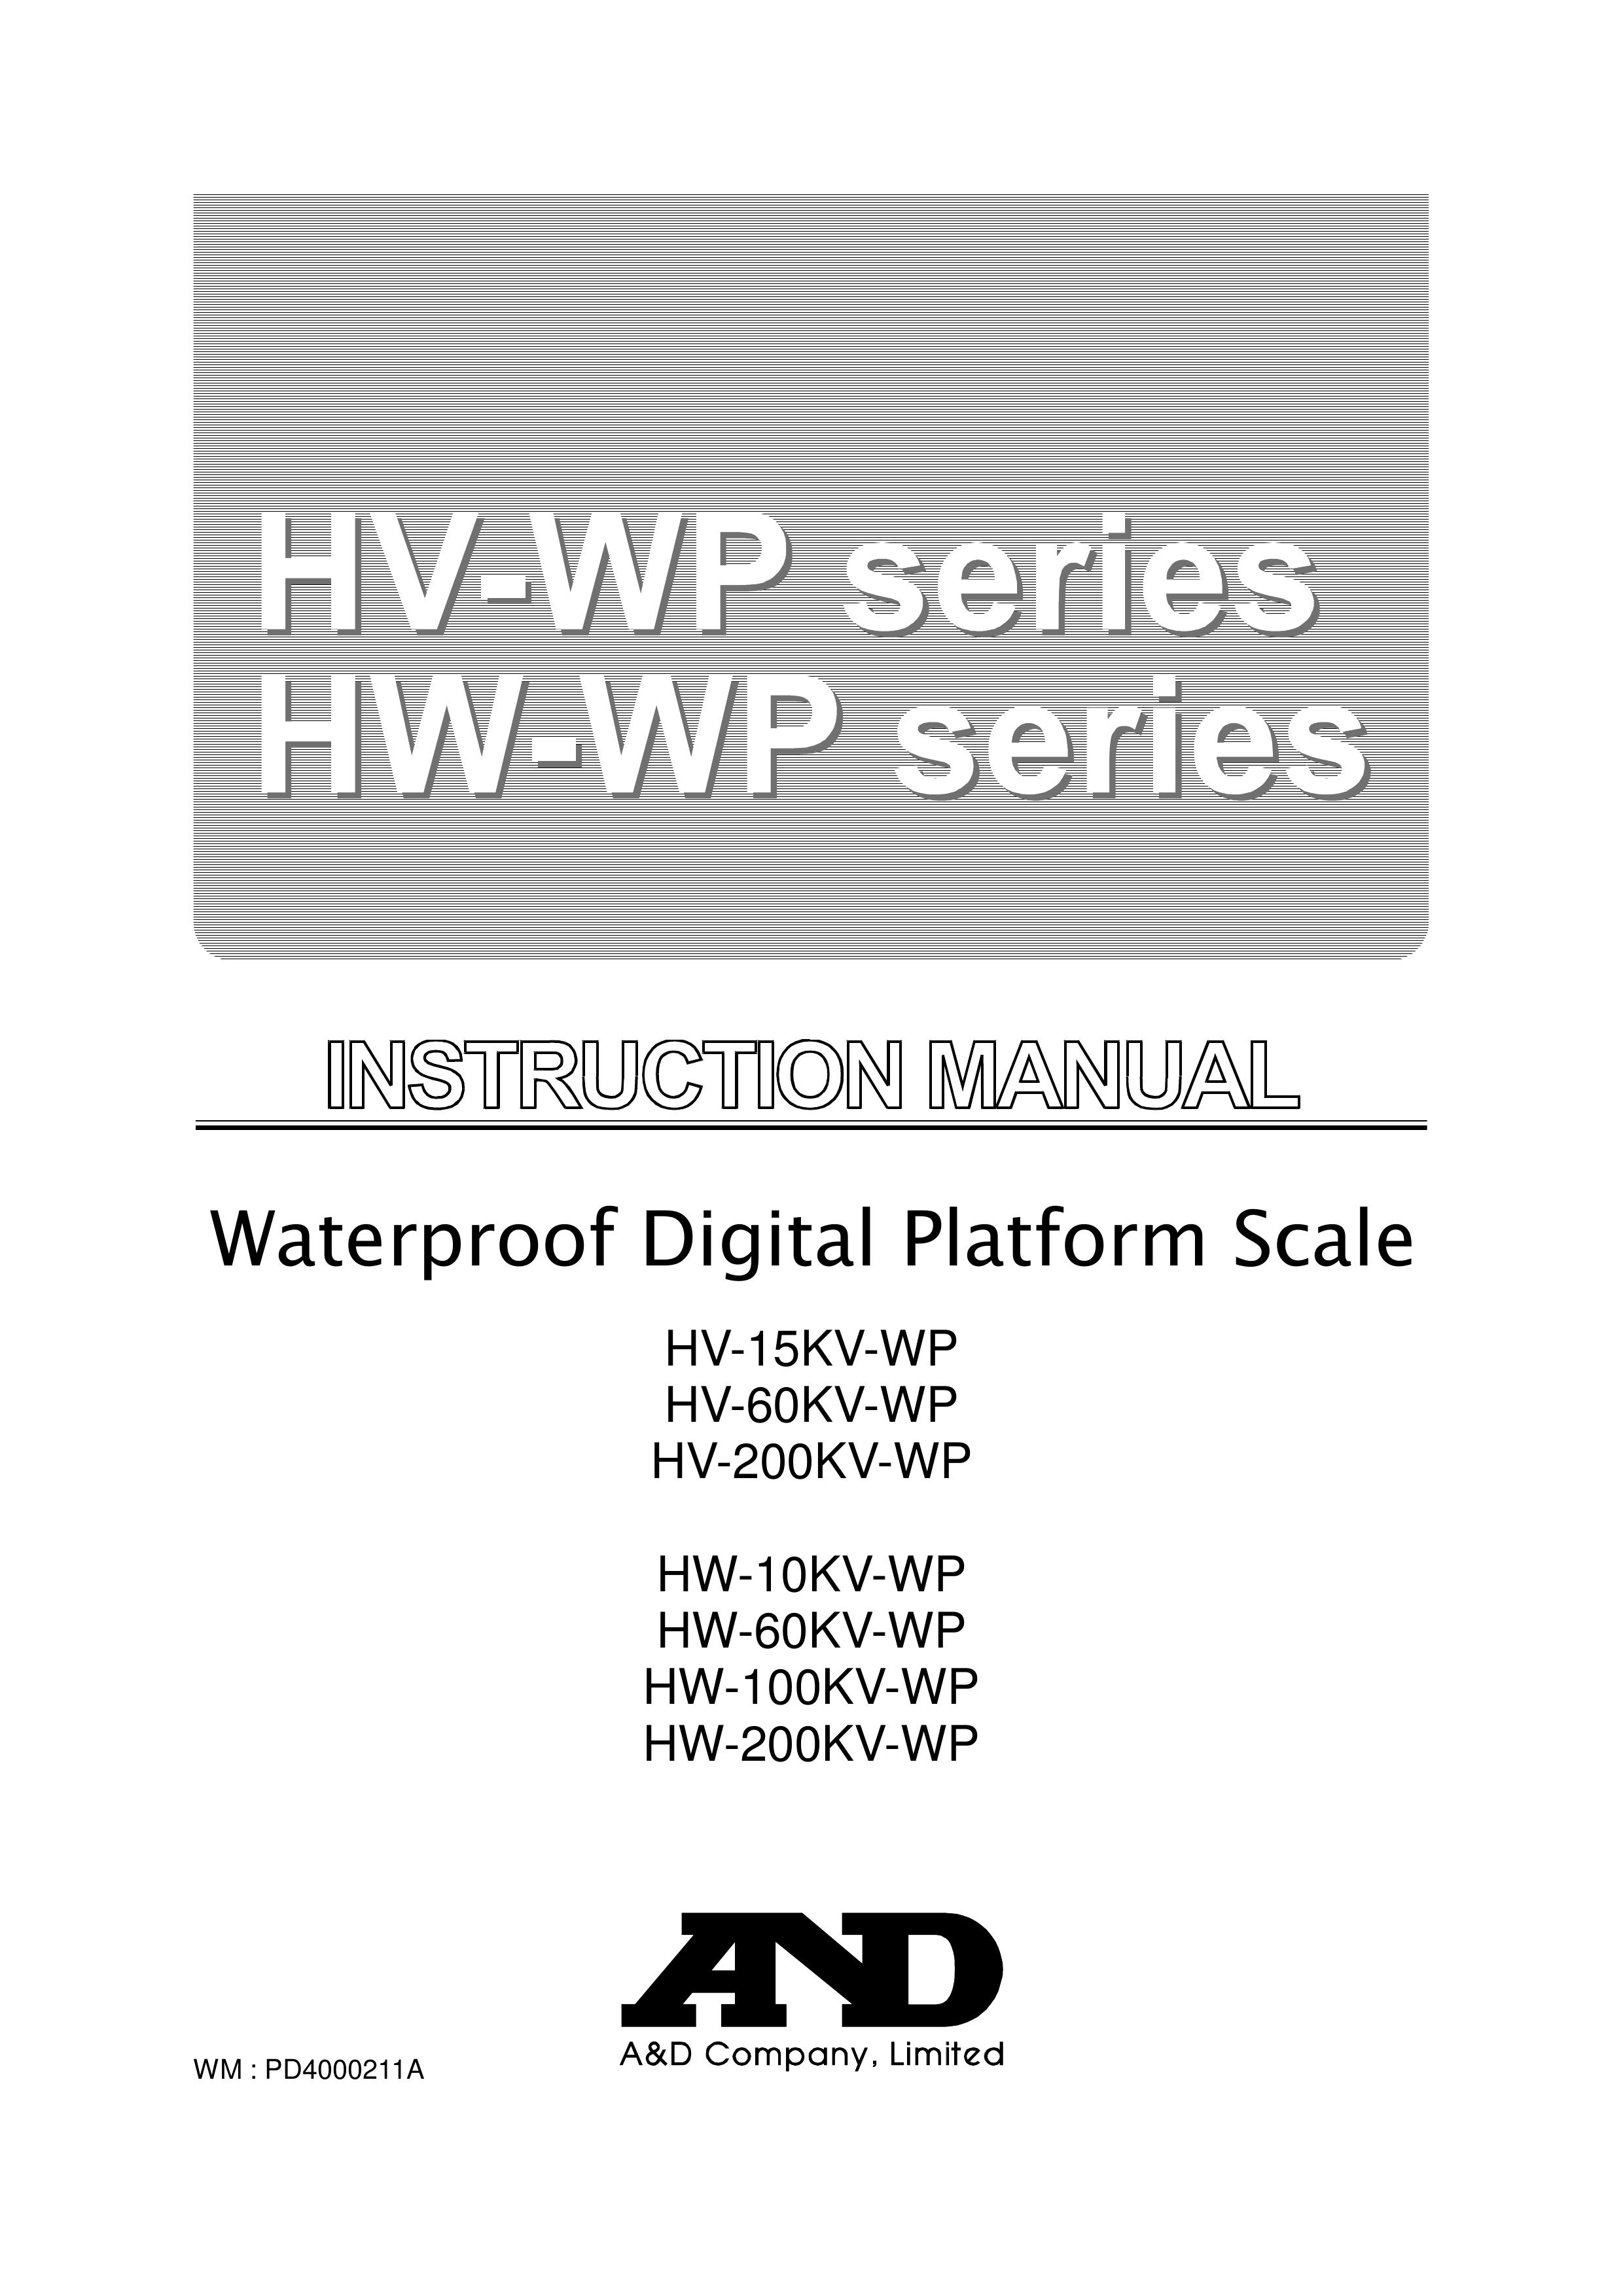 A&D HV-200KV-WP Scale User Manual